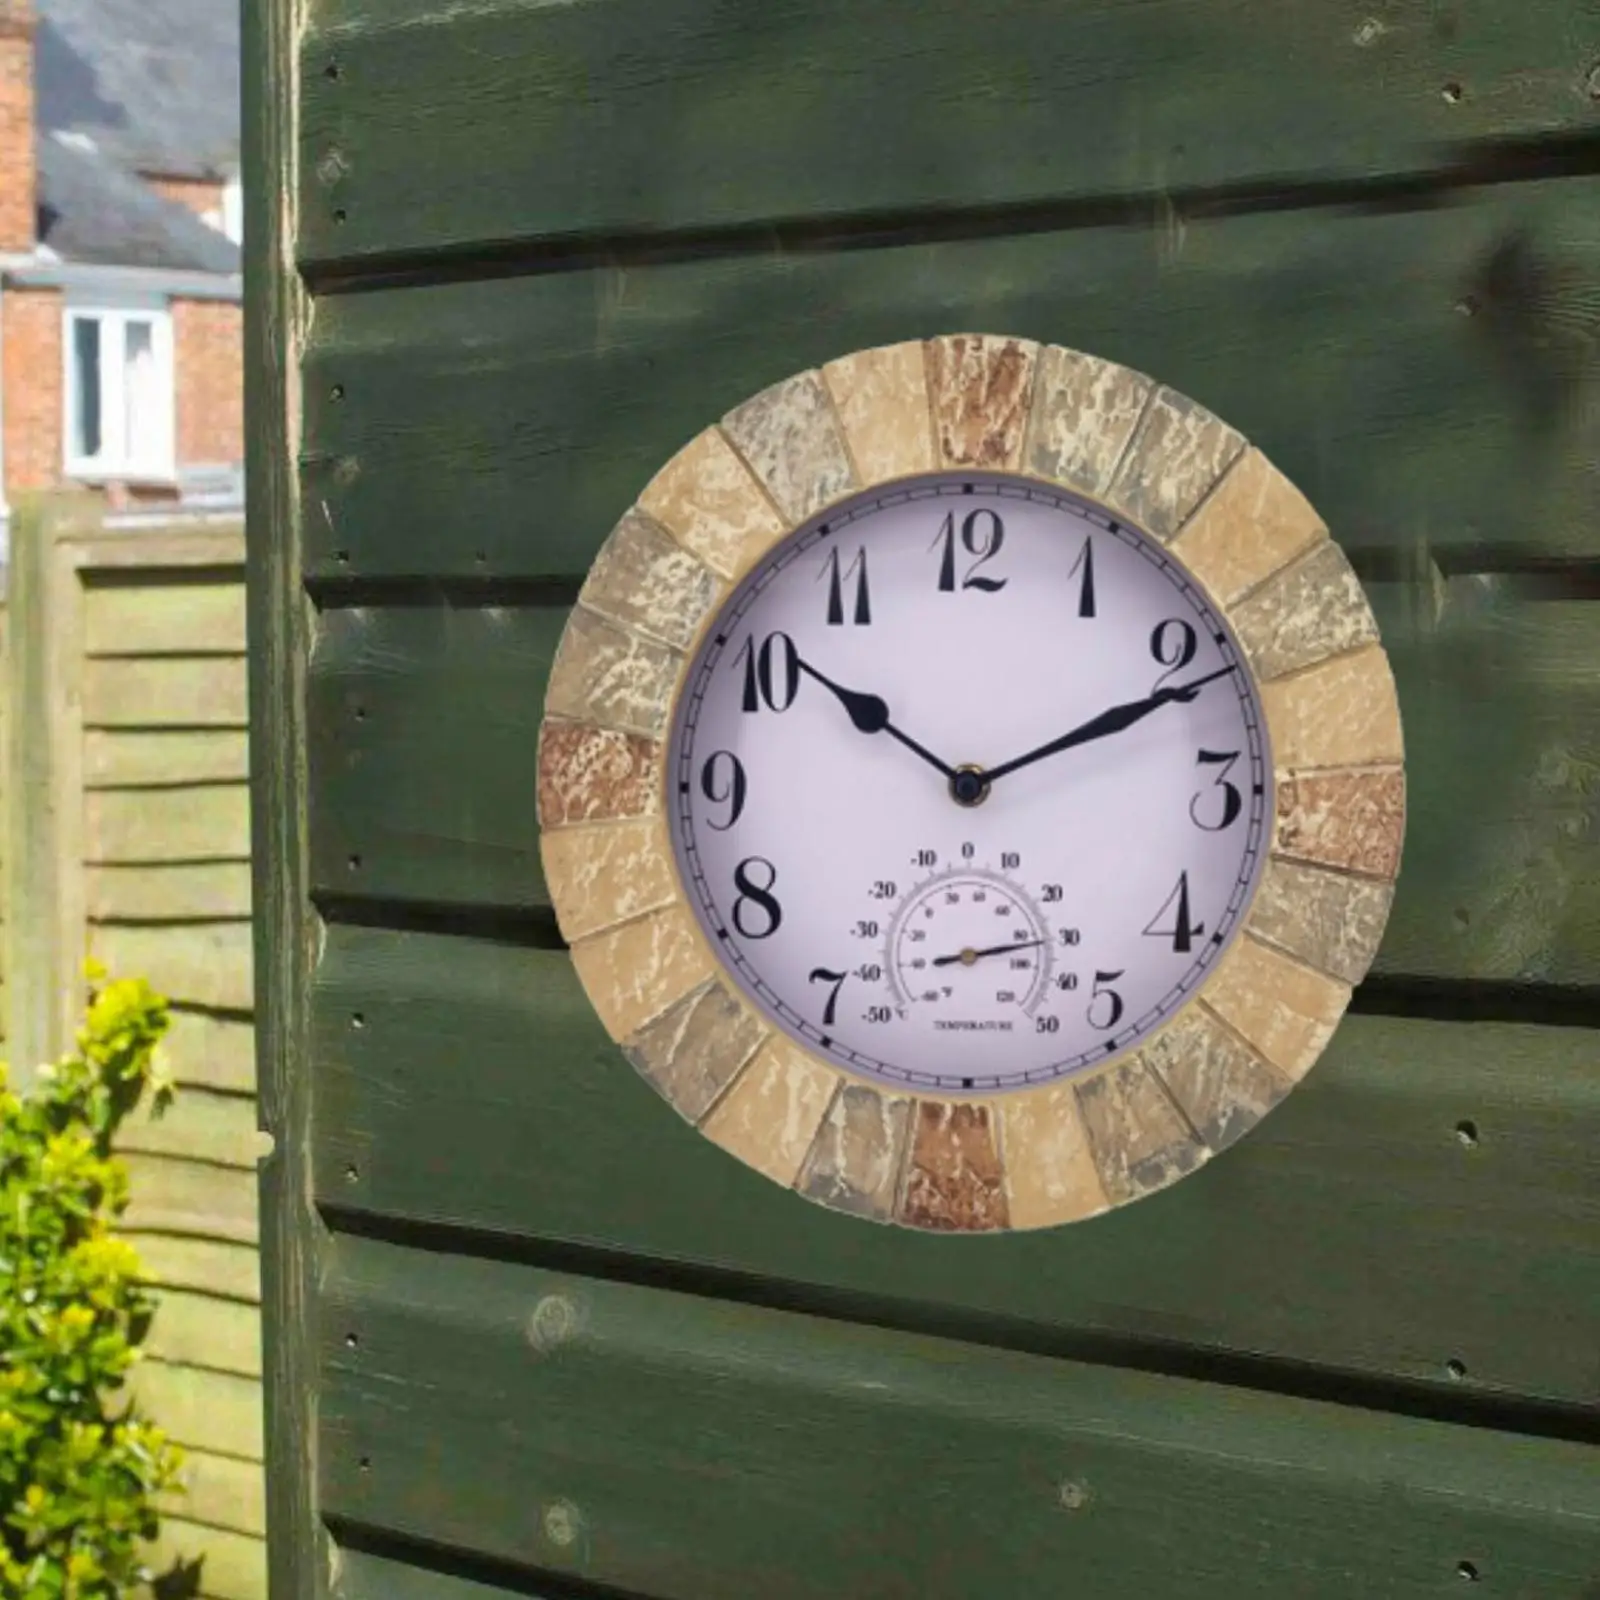 Multipurpose Outdoor Wall Clock Waterproof Temperature Display Silent 10inch Clocks for Garden Home Bedroom Bathroom Decorative